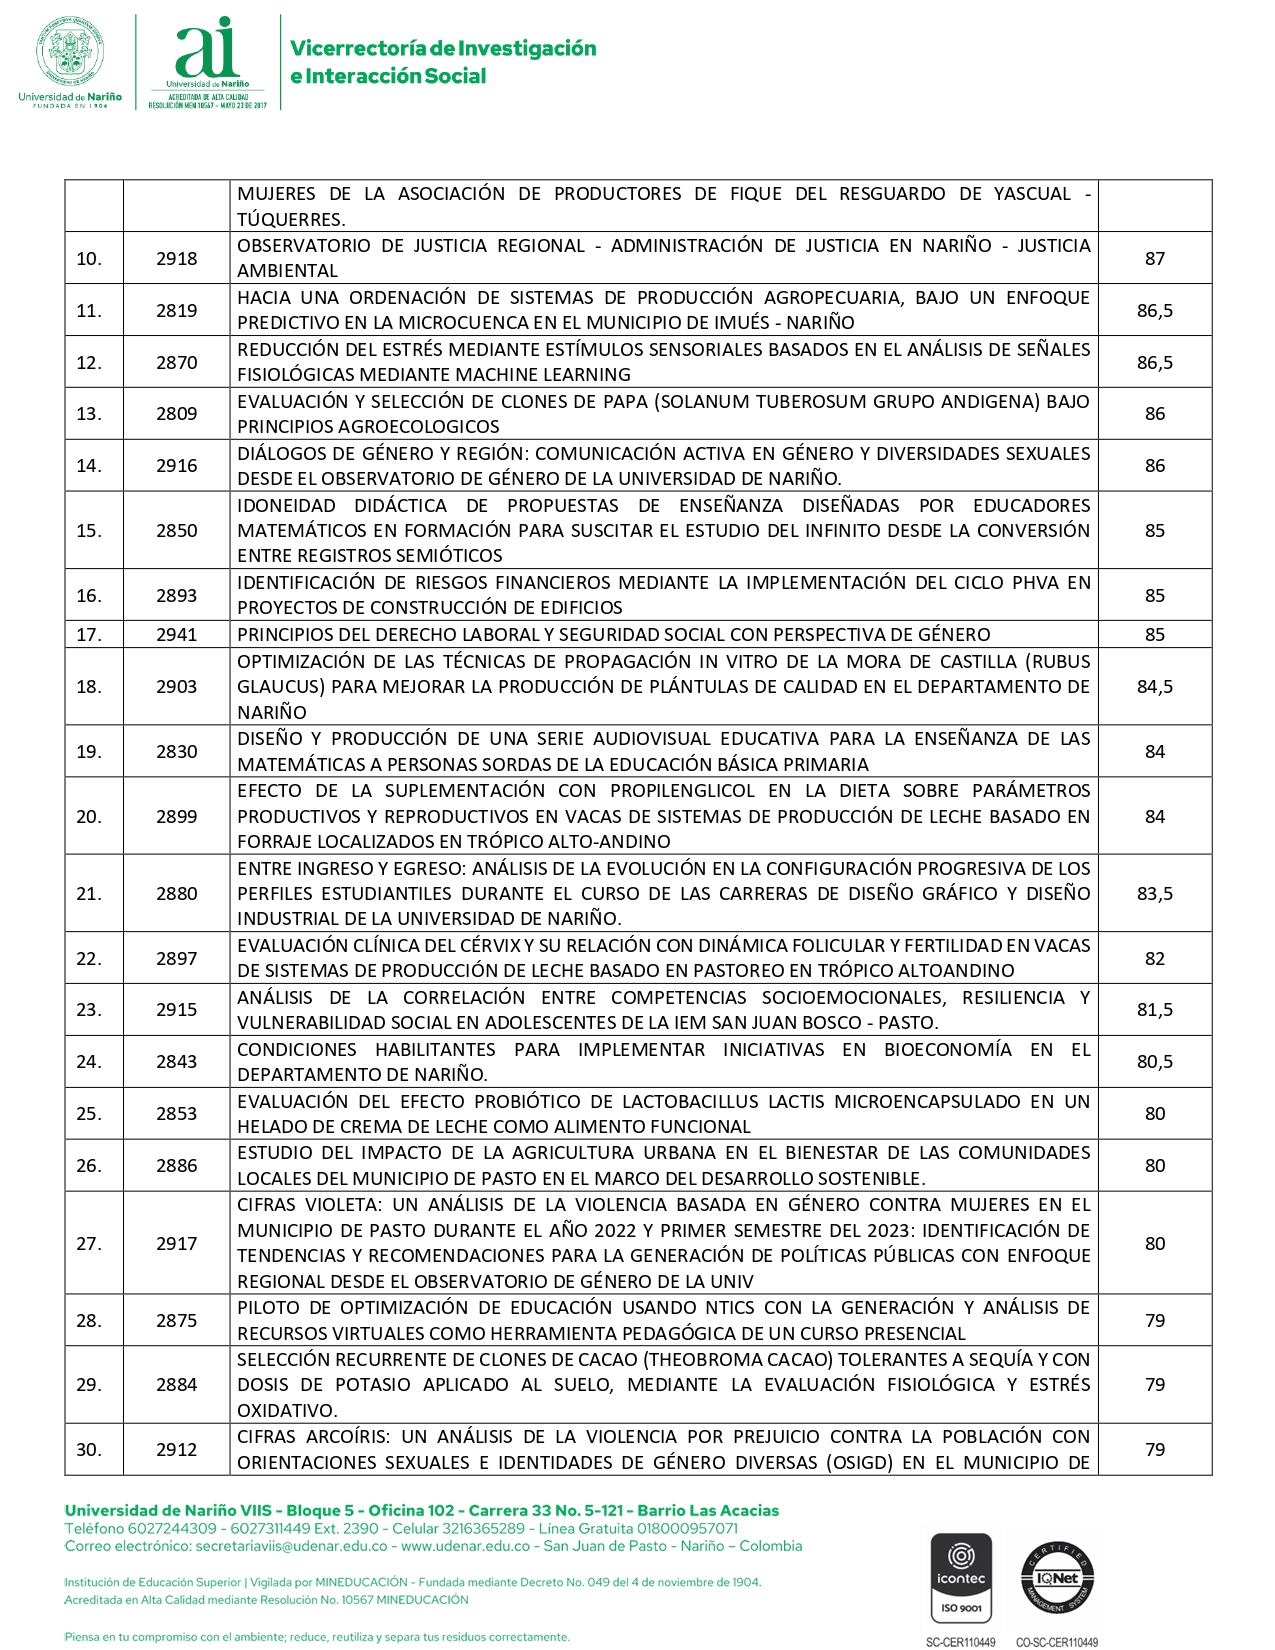 UDENAR-PERIODICO-COMUNICADO-003-CONVOCATORIAS-DE-INVESTIGACION-2_page-0002